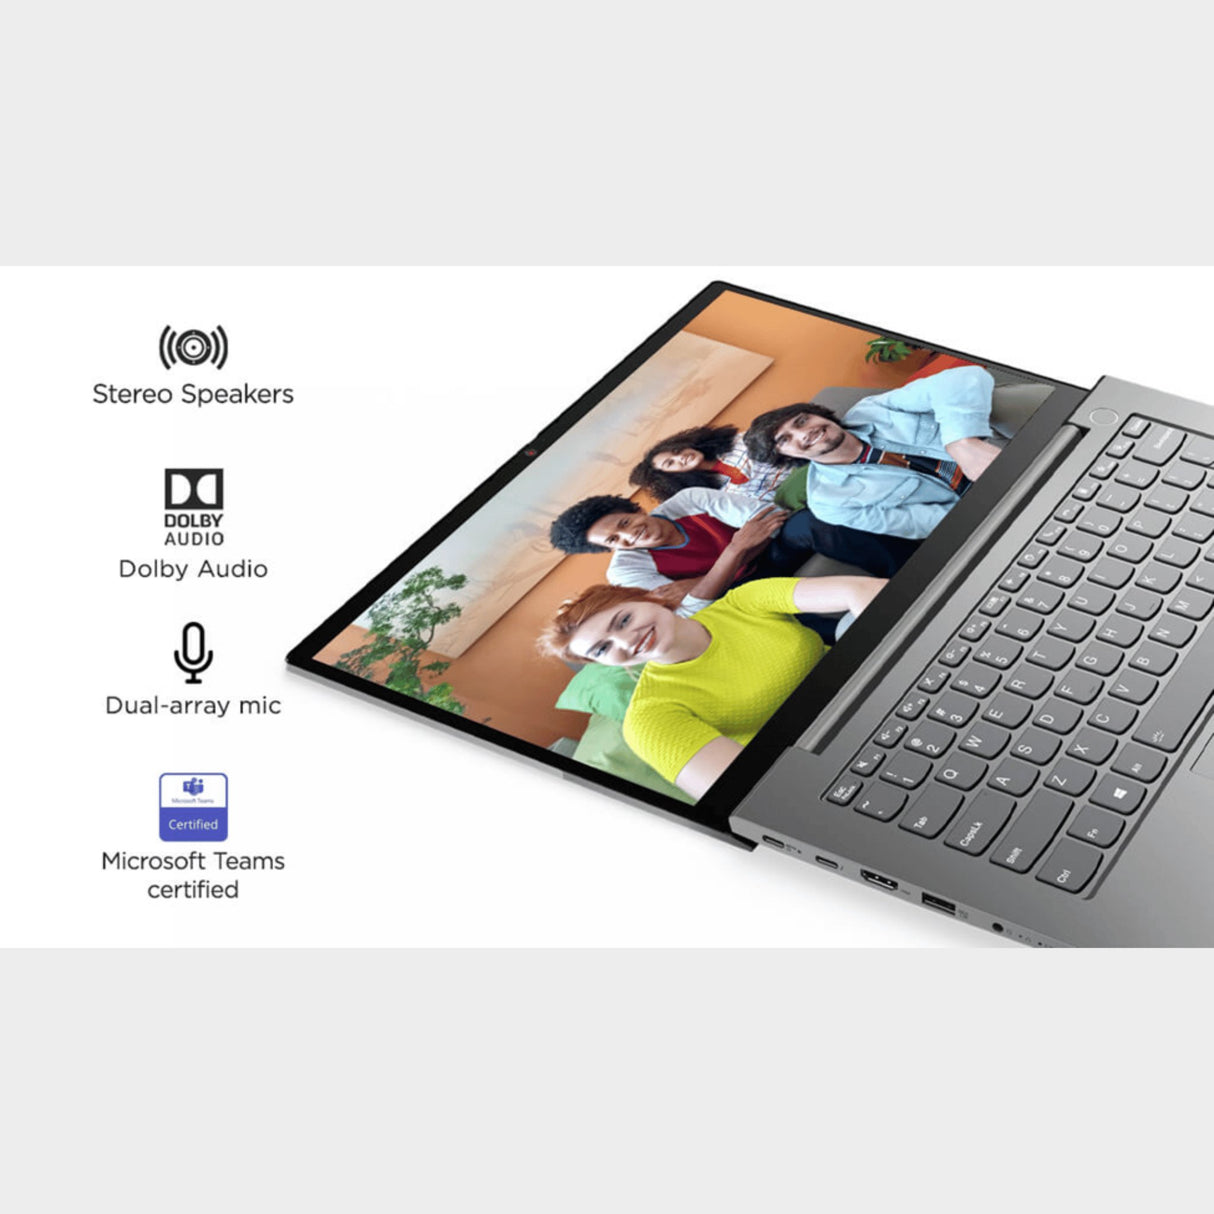 Lenovo ThinkBook 14 G2 ITL Corei7 8GB/1TB Touchscreen Laptop  - KWT Tech Mart